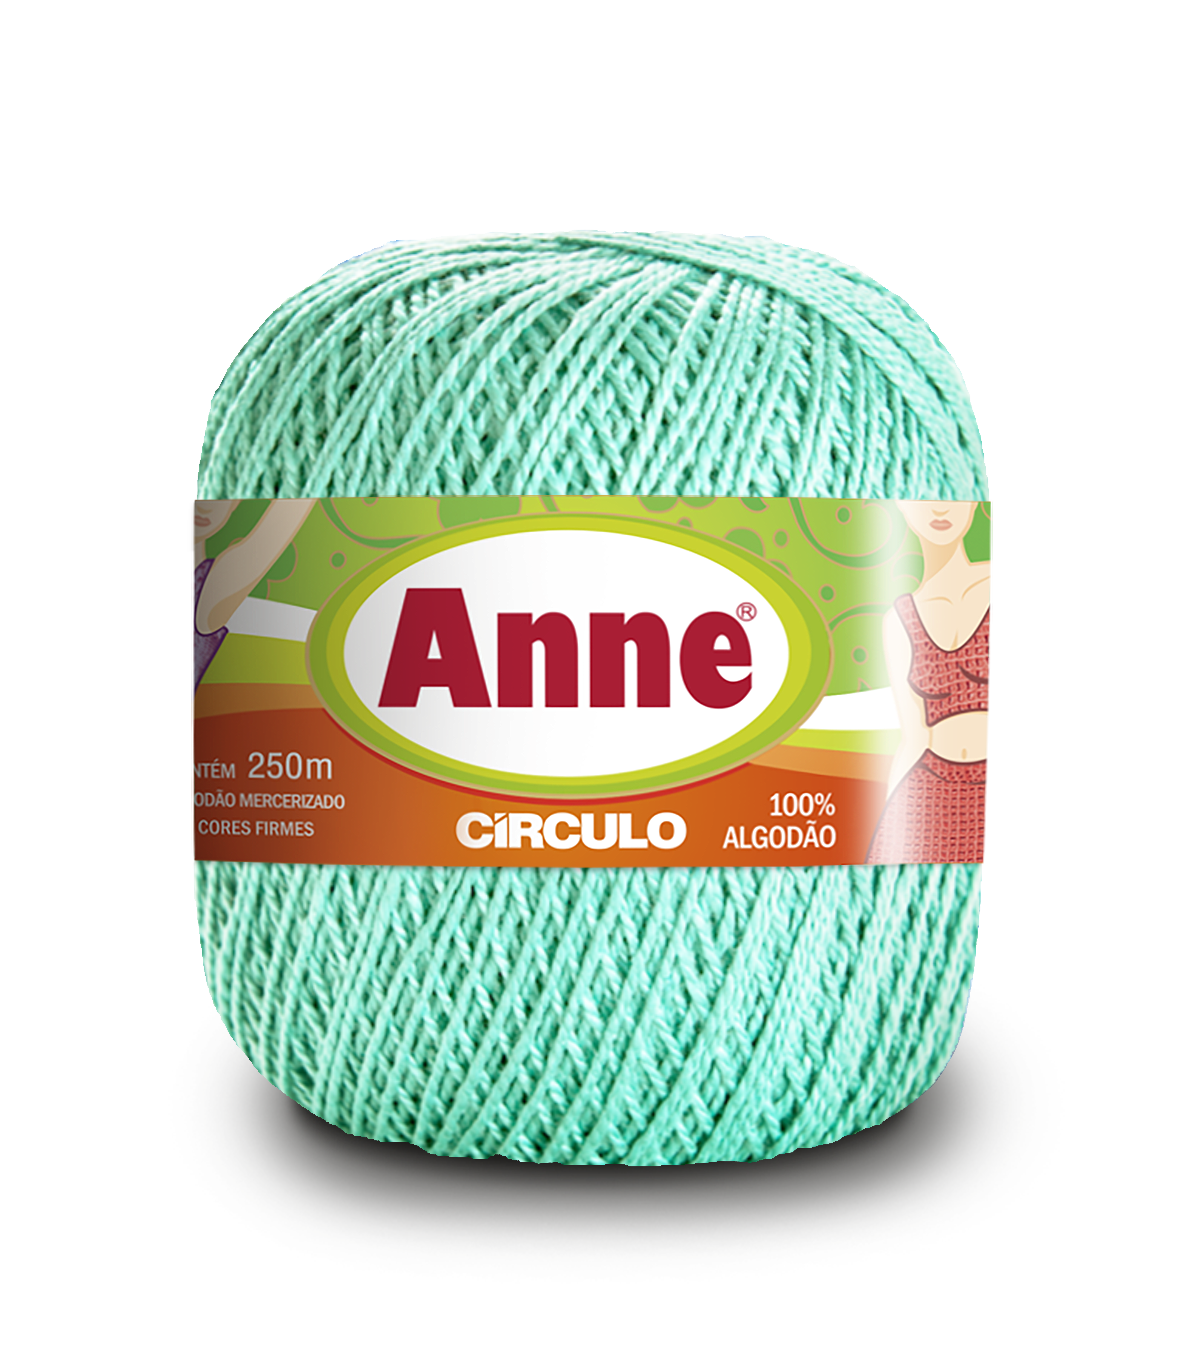 Circulo ANNE 250 m 73 gr, 100% Cotton Yarn (246808)